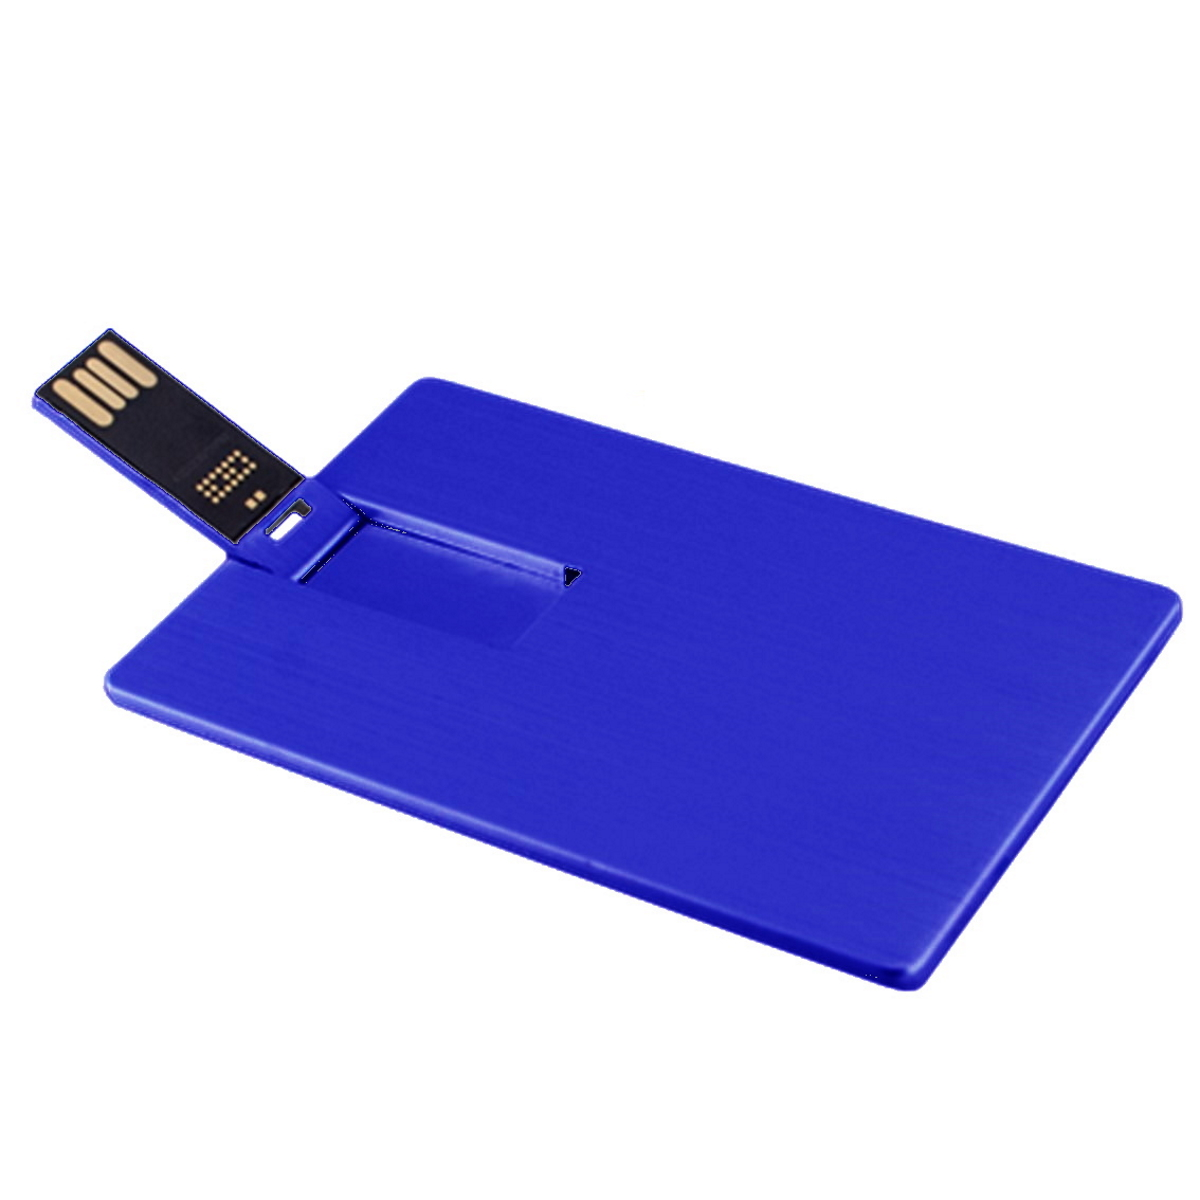 USB GERMANY ® Metall-Kreditkarte USB-Stick (Blau, 8 GB)